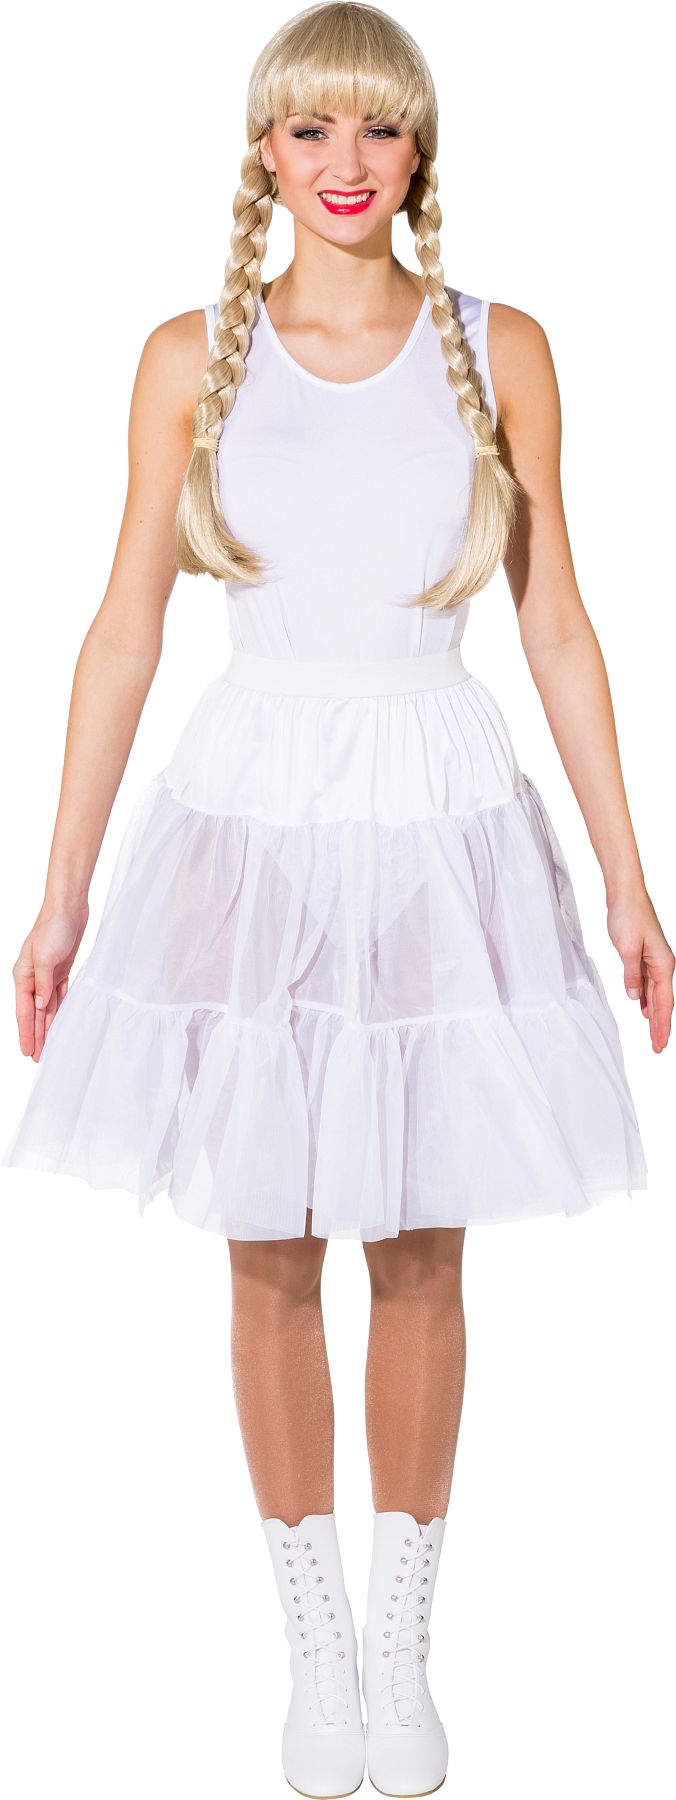 Petticoat knee length, white